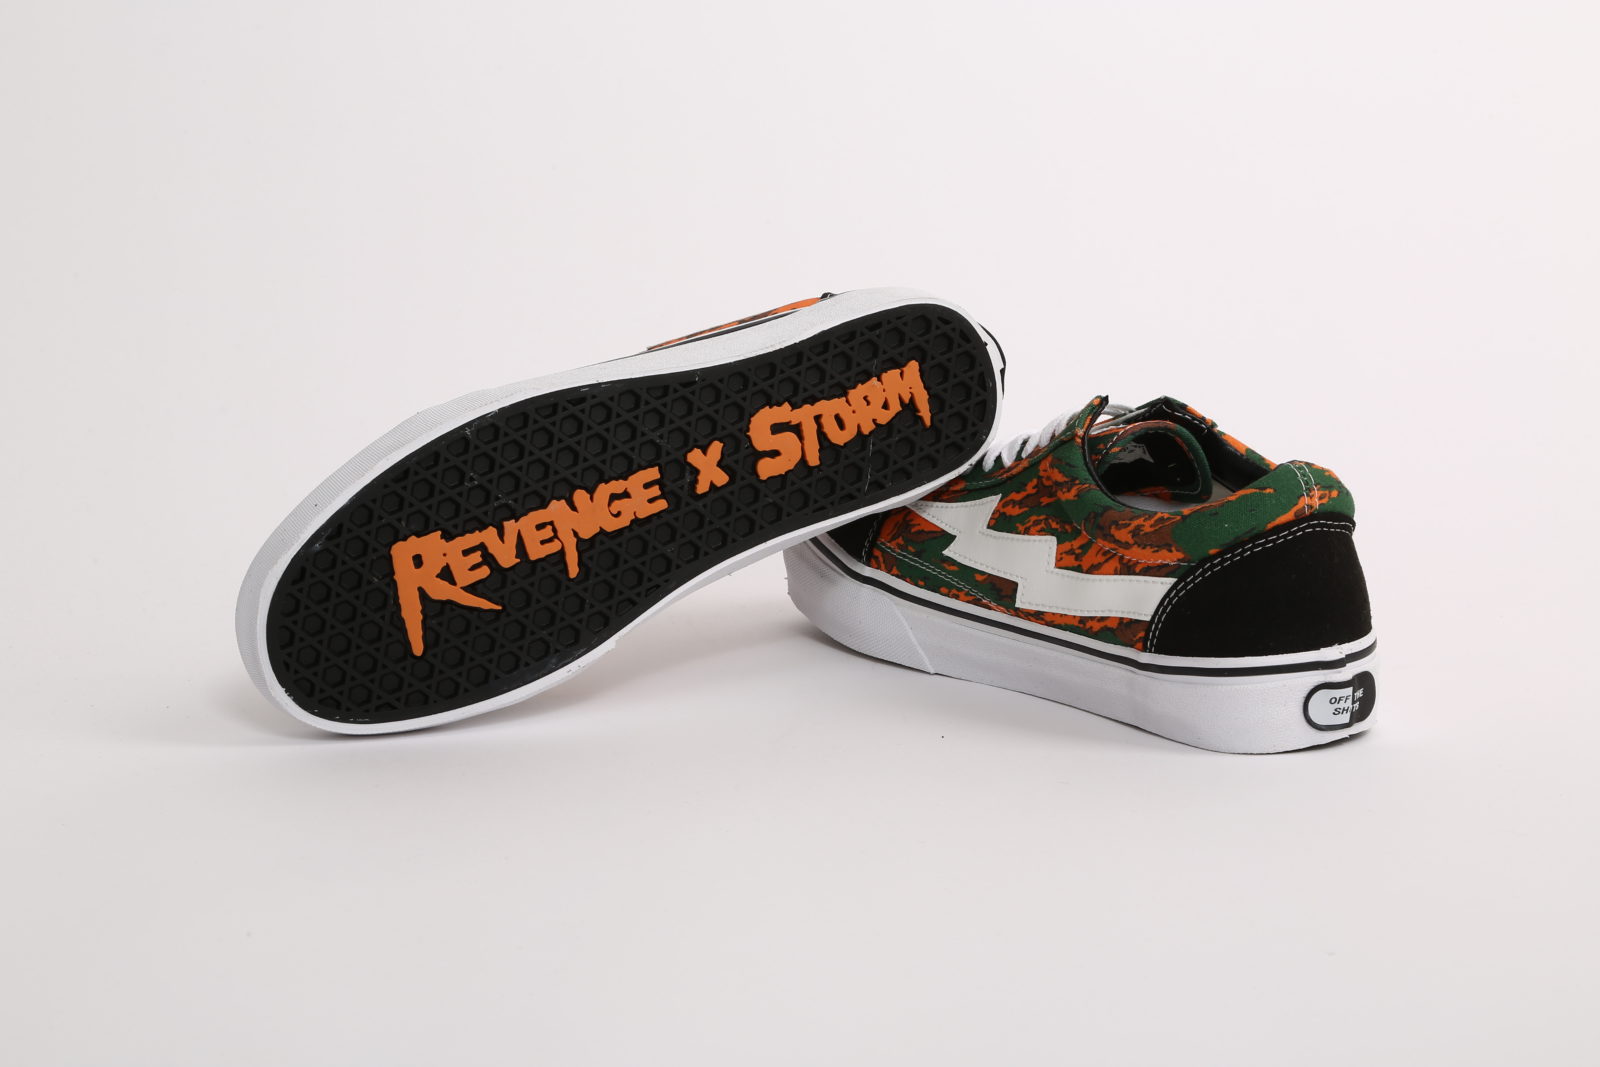 chaussure revenge x storm